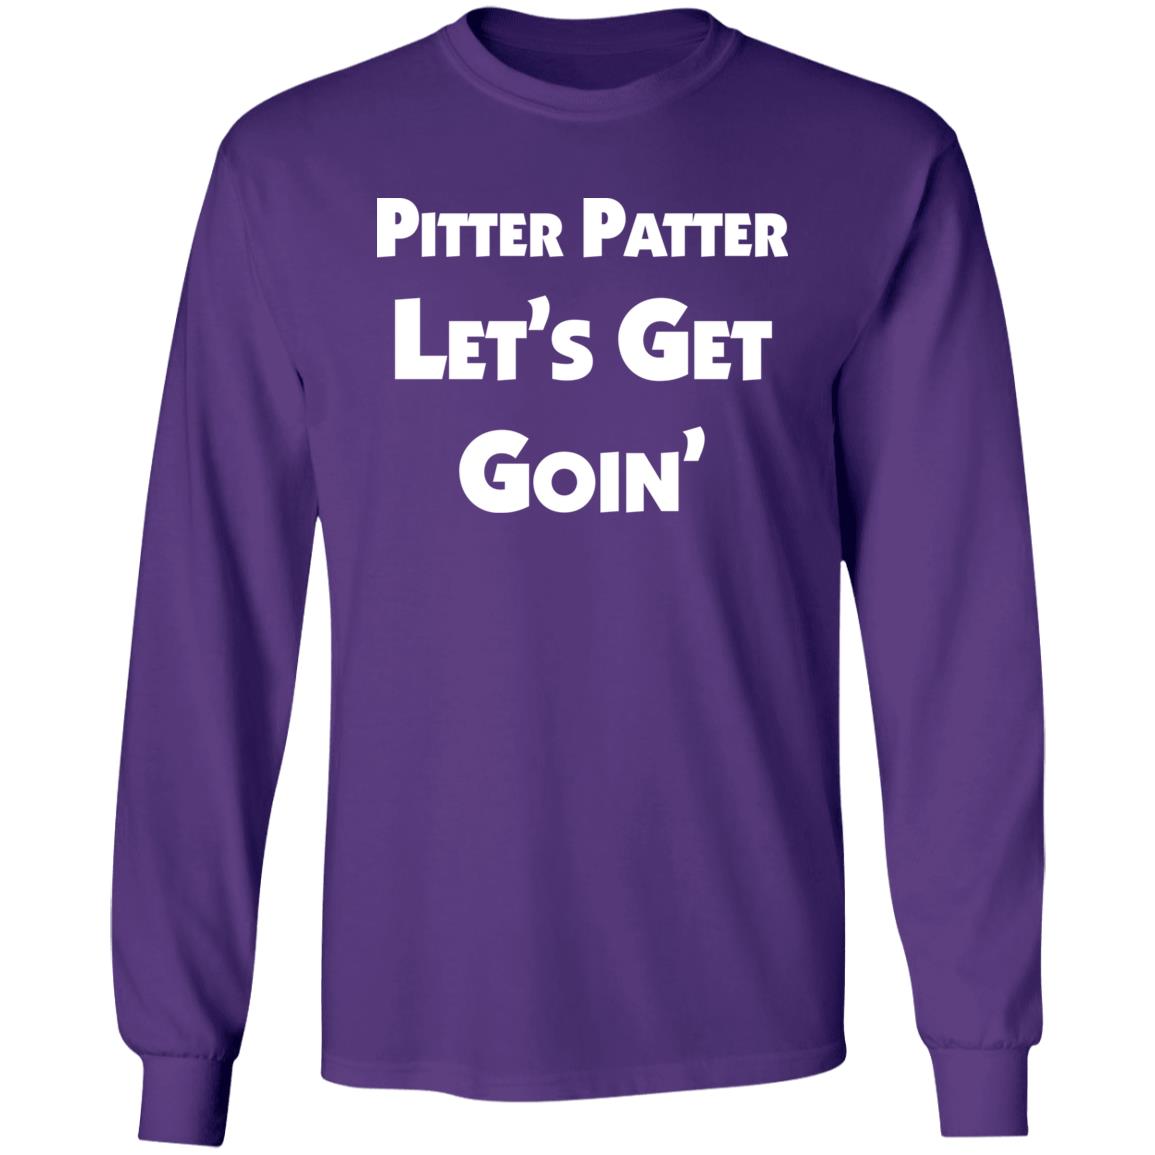 Pitter Patter Let’s Get Goin’ Shirt Letterkenny Merch